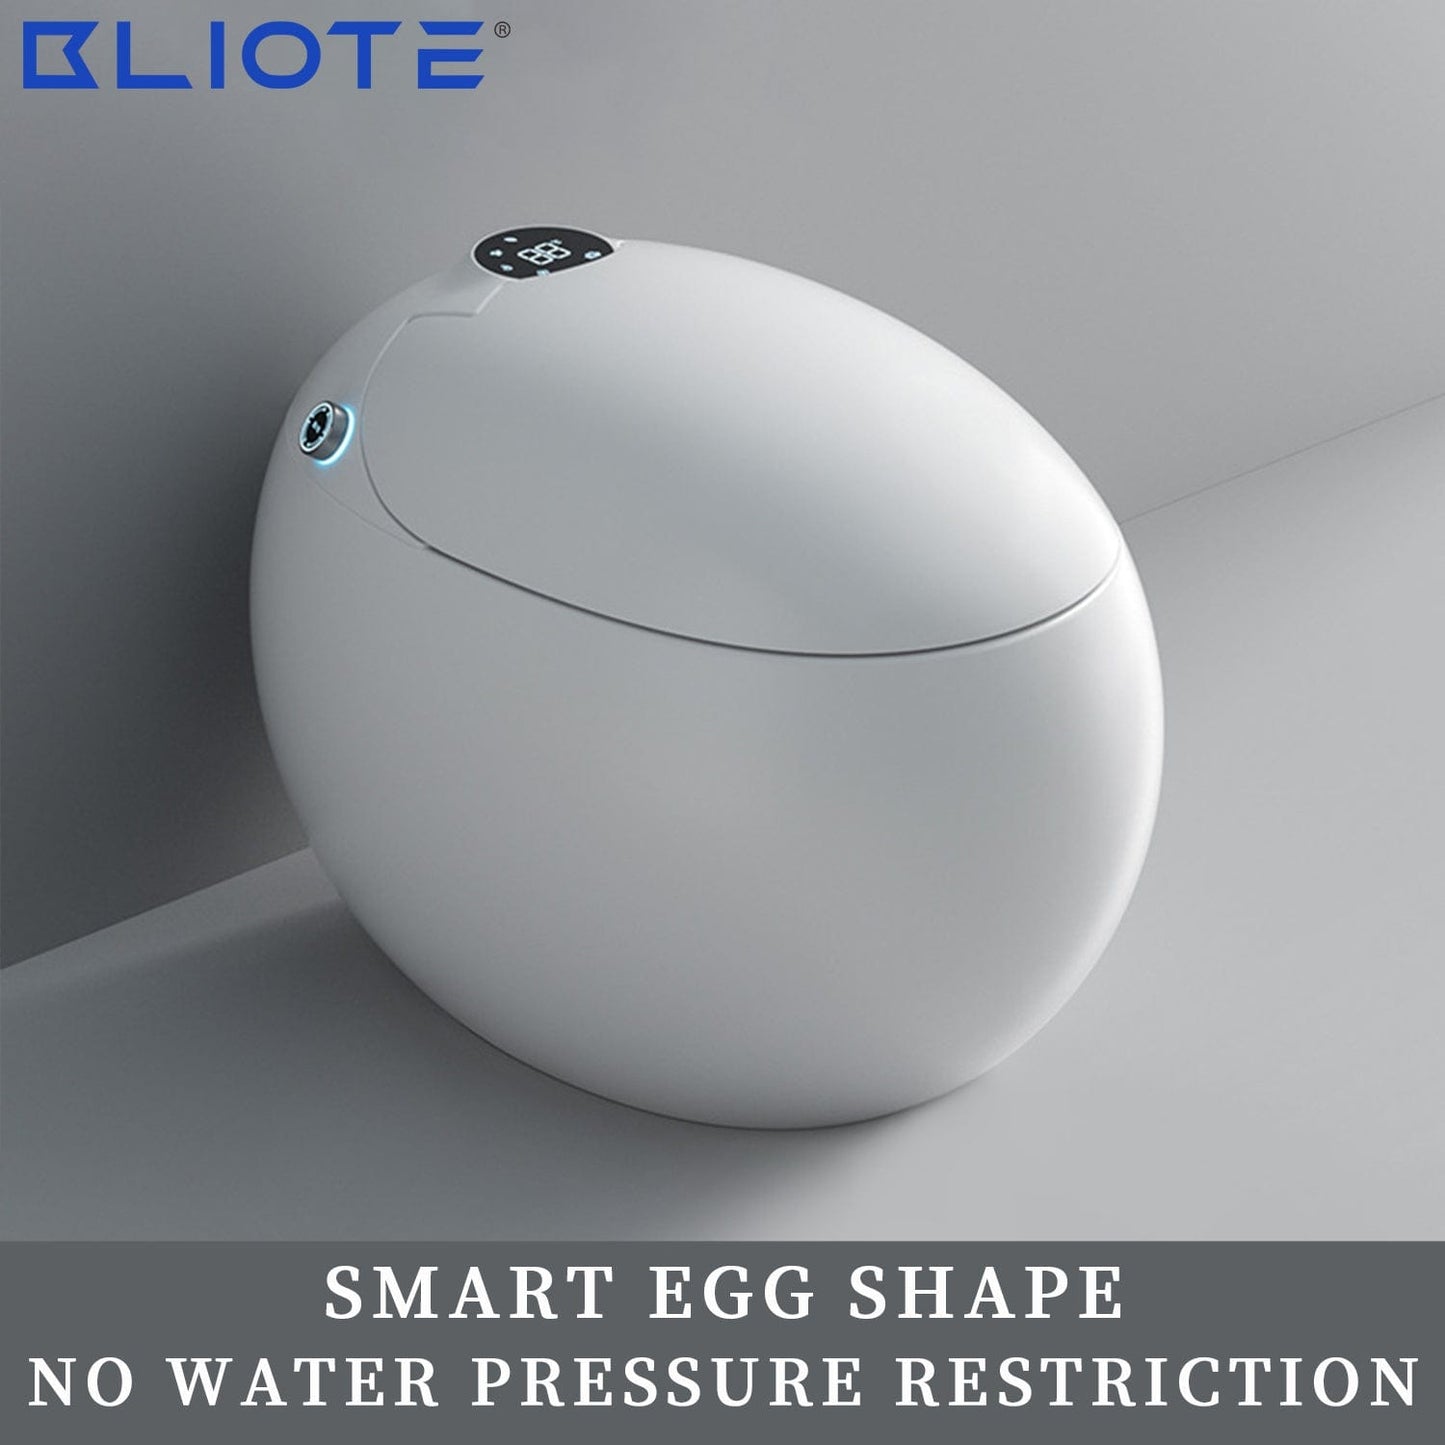 Bliote™ Smart Toilet 70079